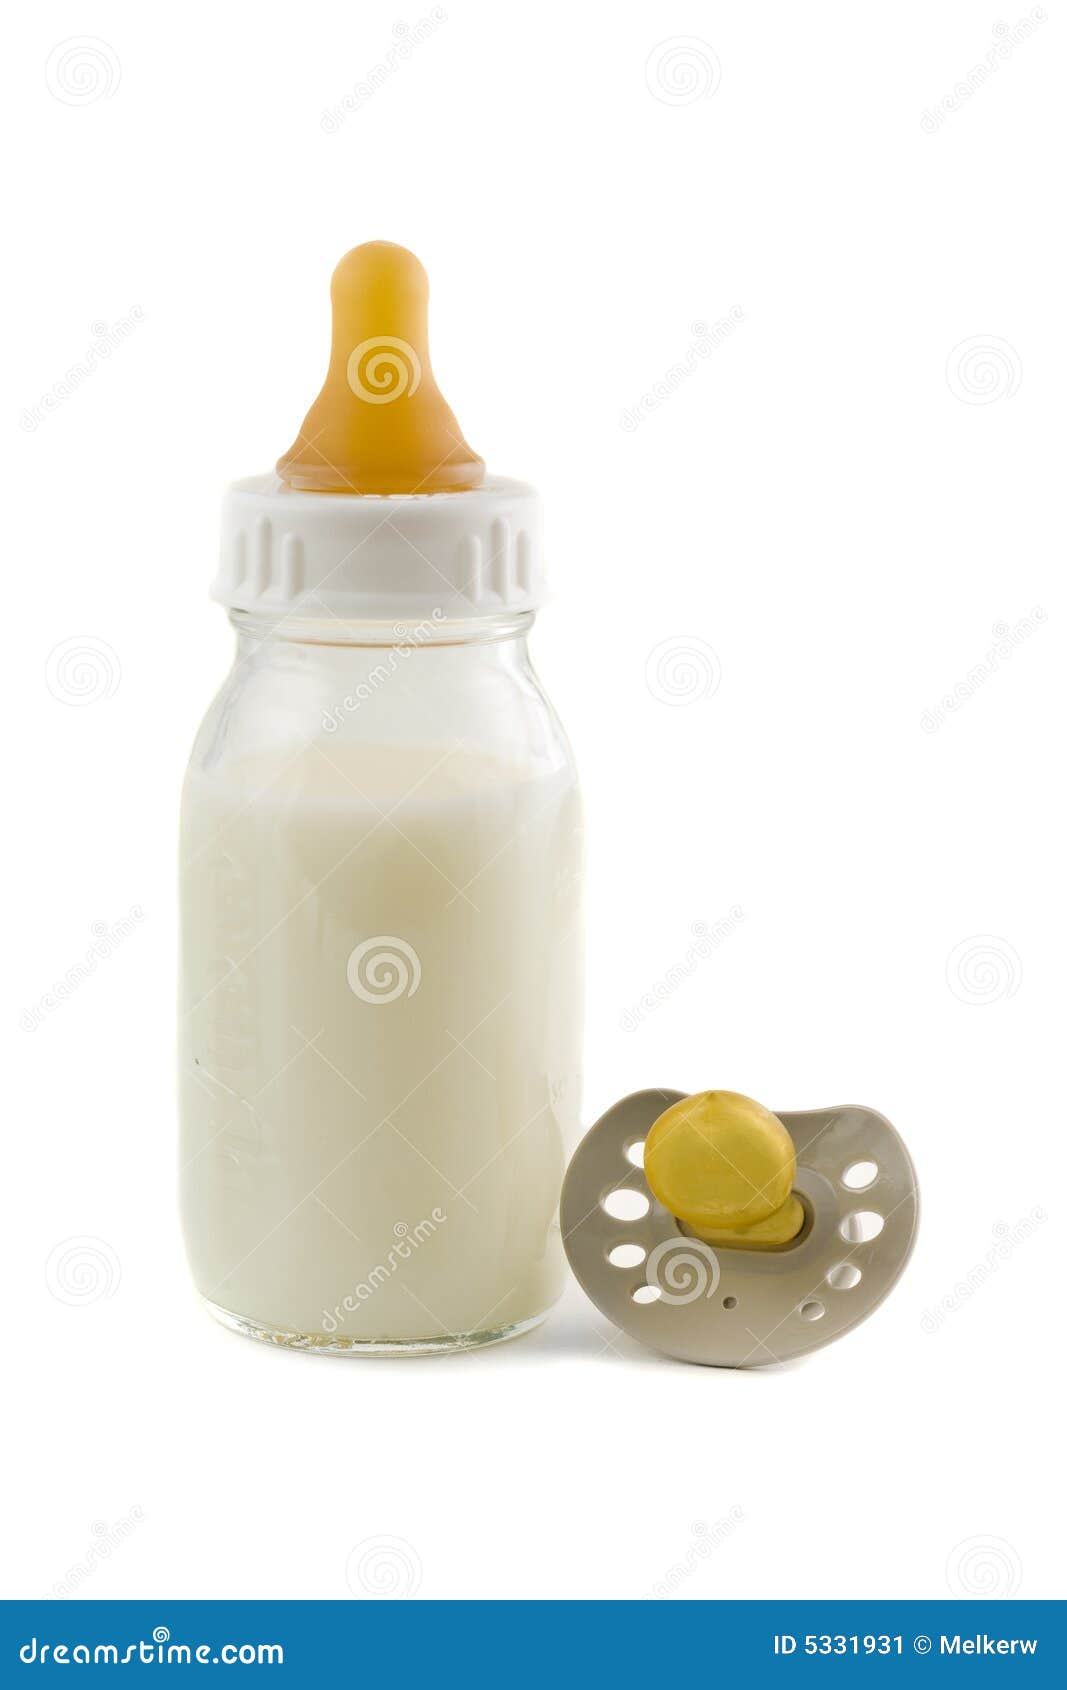 https://thumbs.dreamstime.com/z/baby-bottle-milk-pacifier-isolated-5331931.jpg